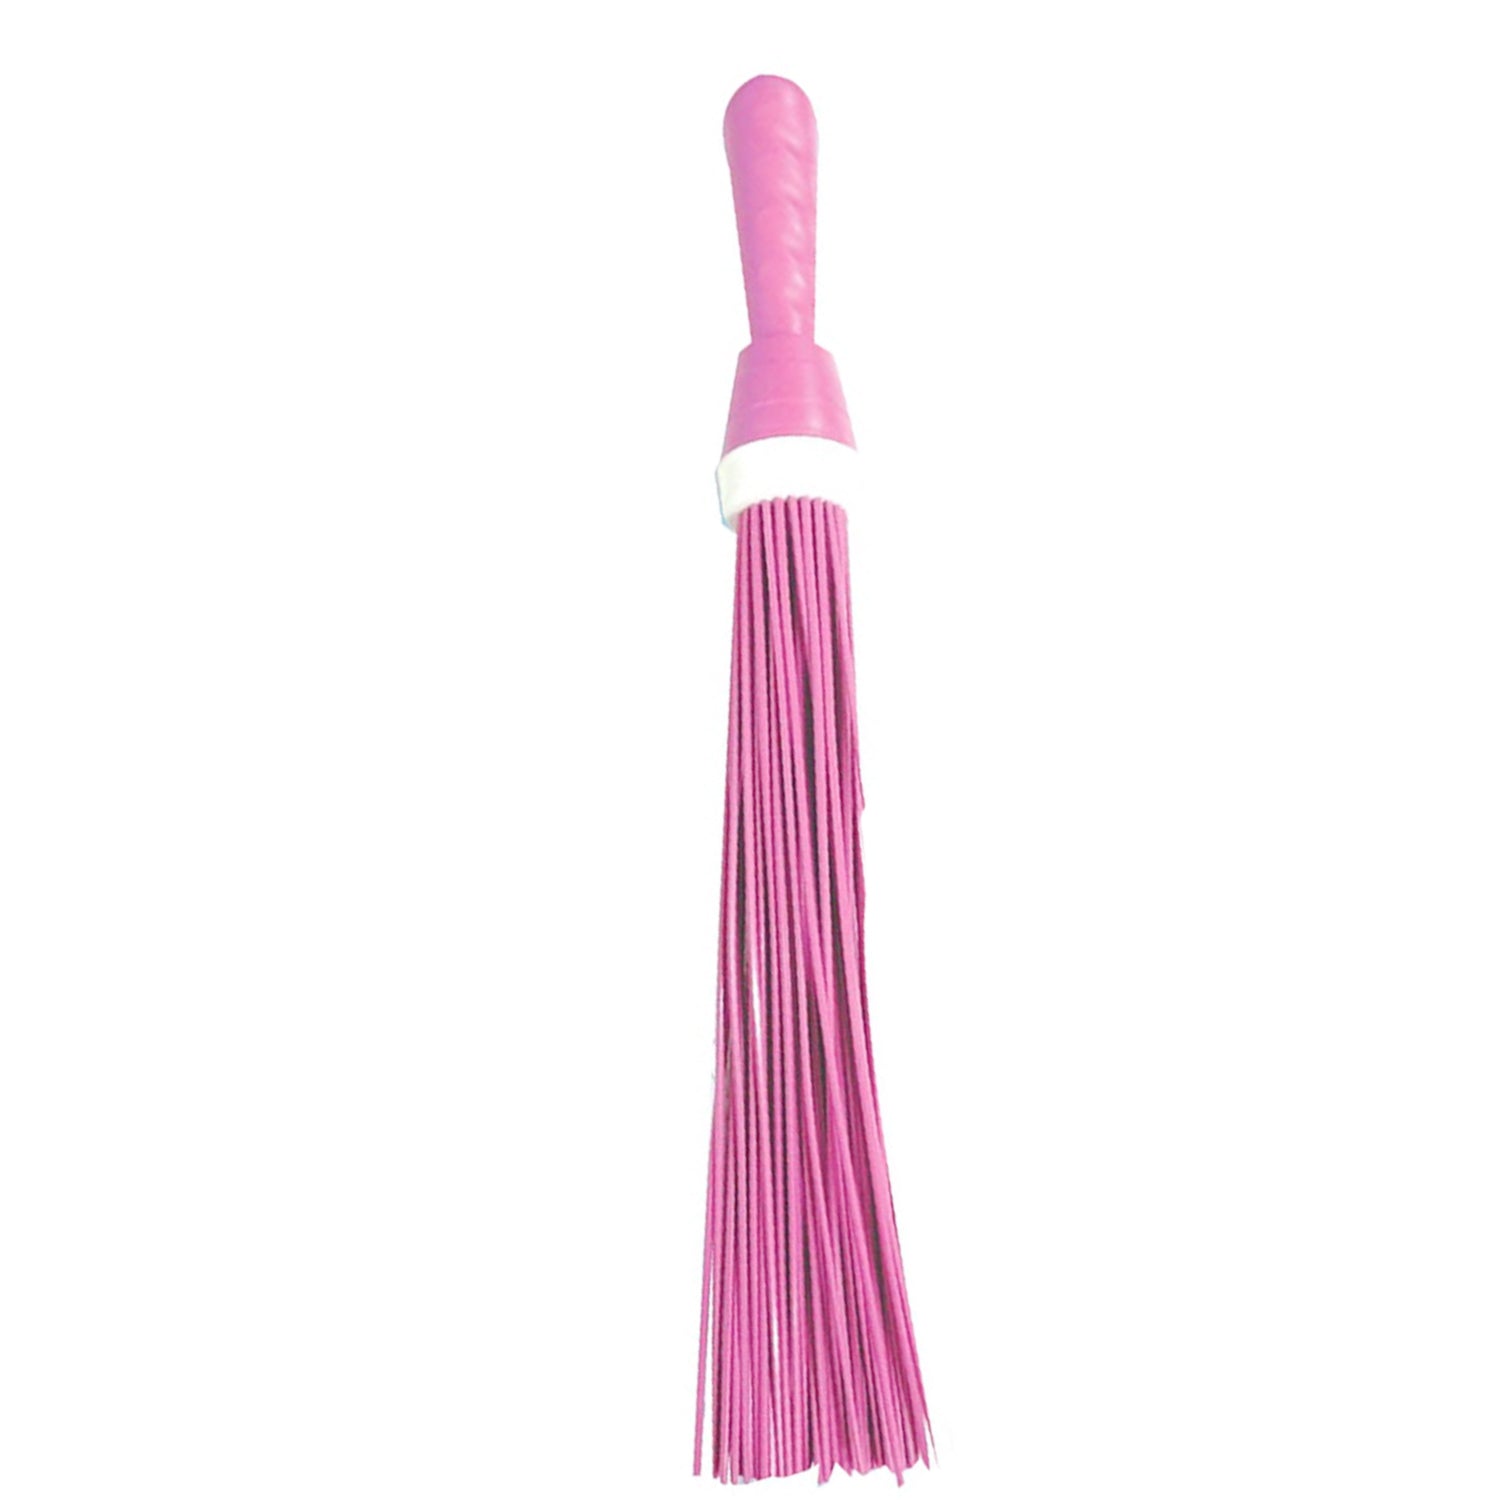 749_Wet & Dry Floor Cleaning Plastic Broom 